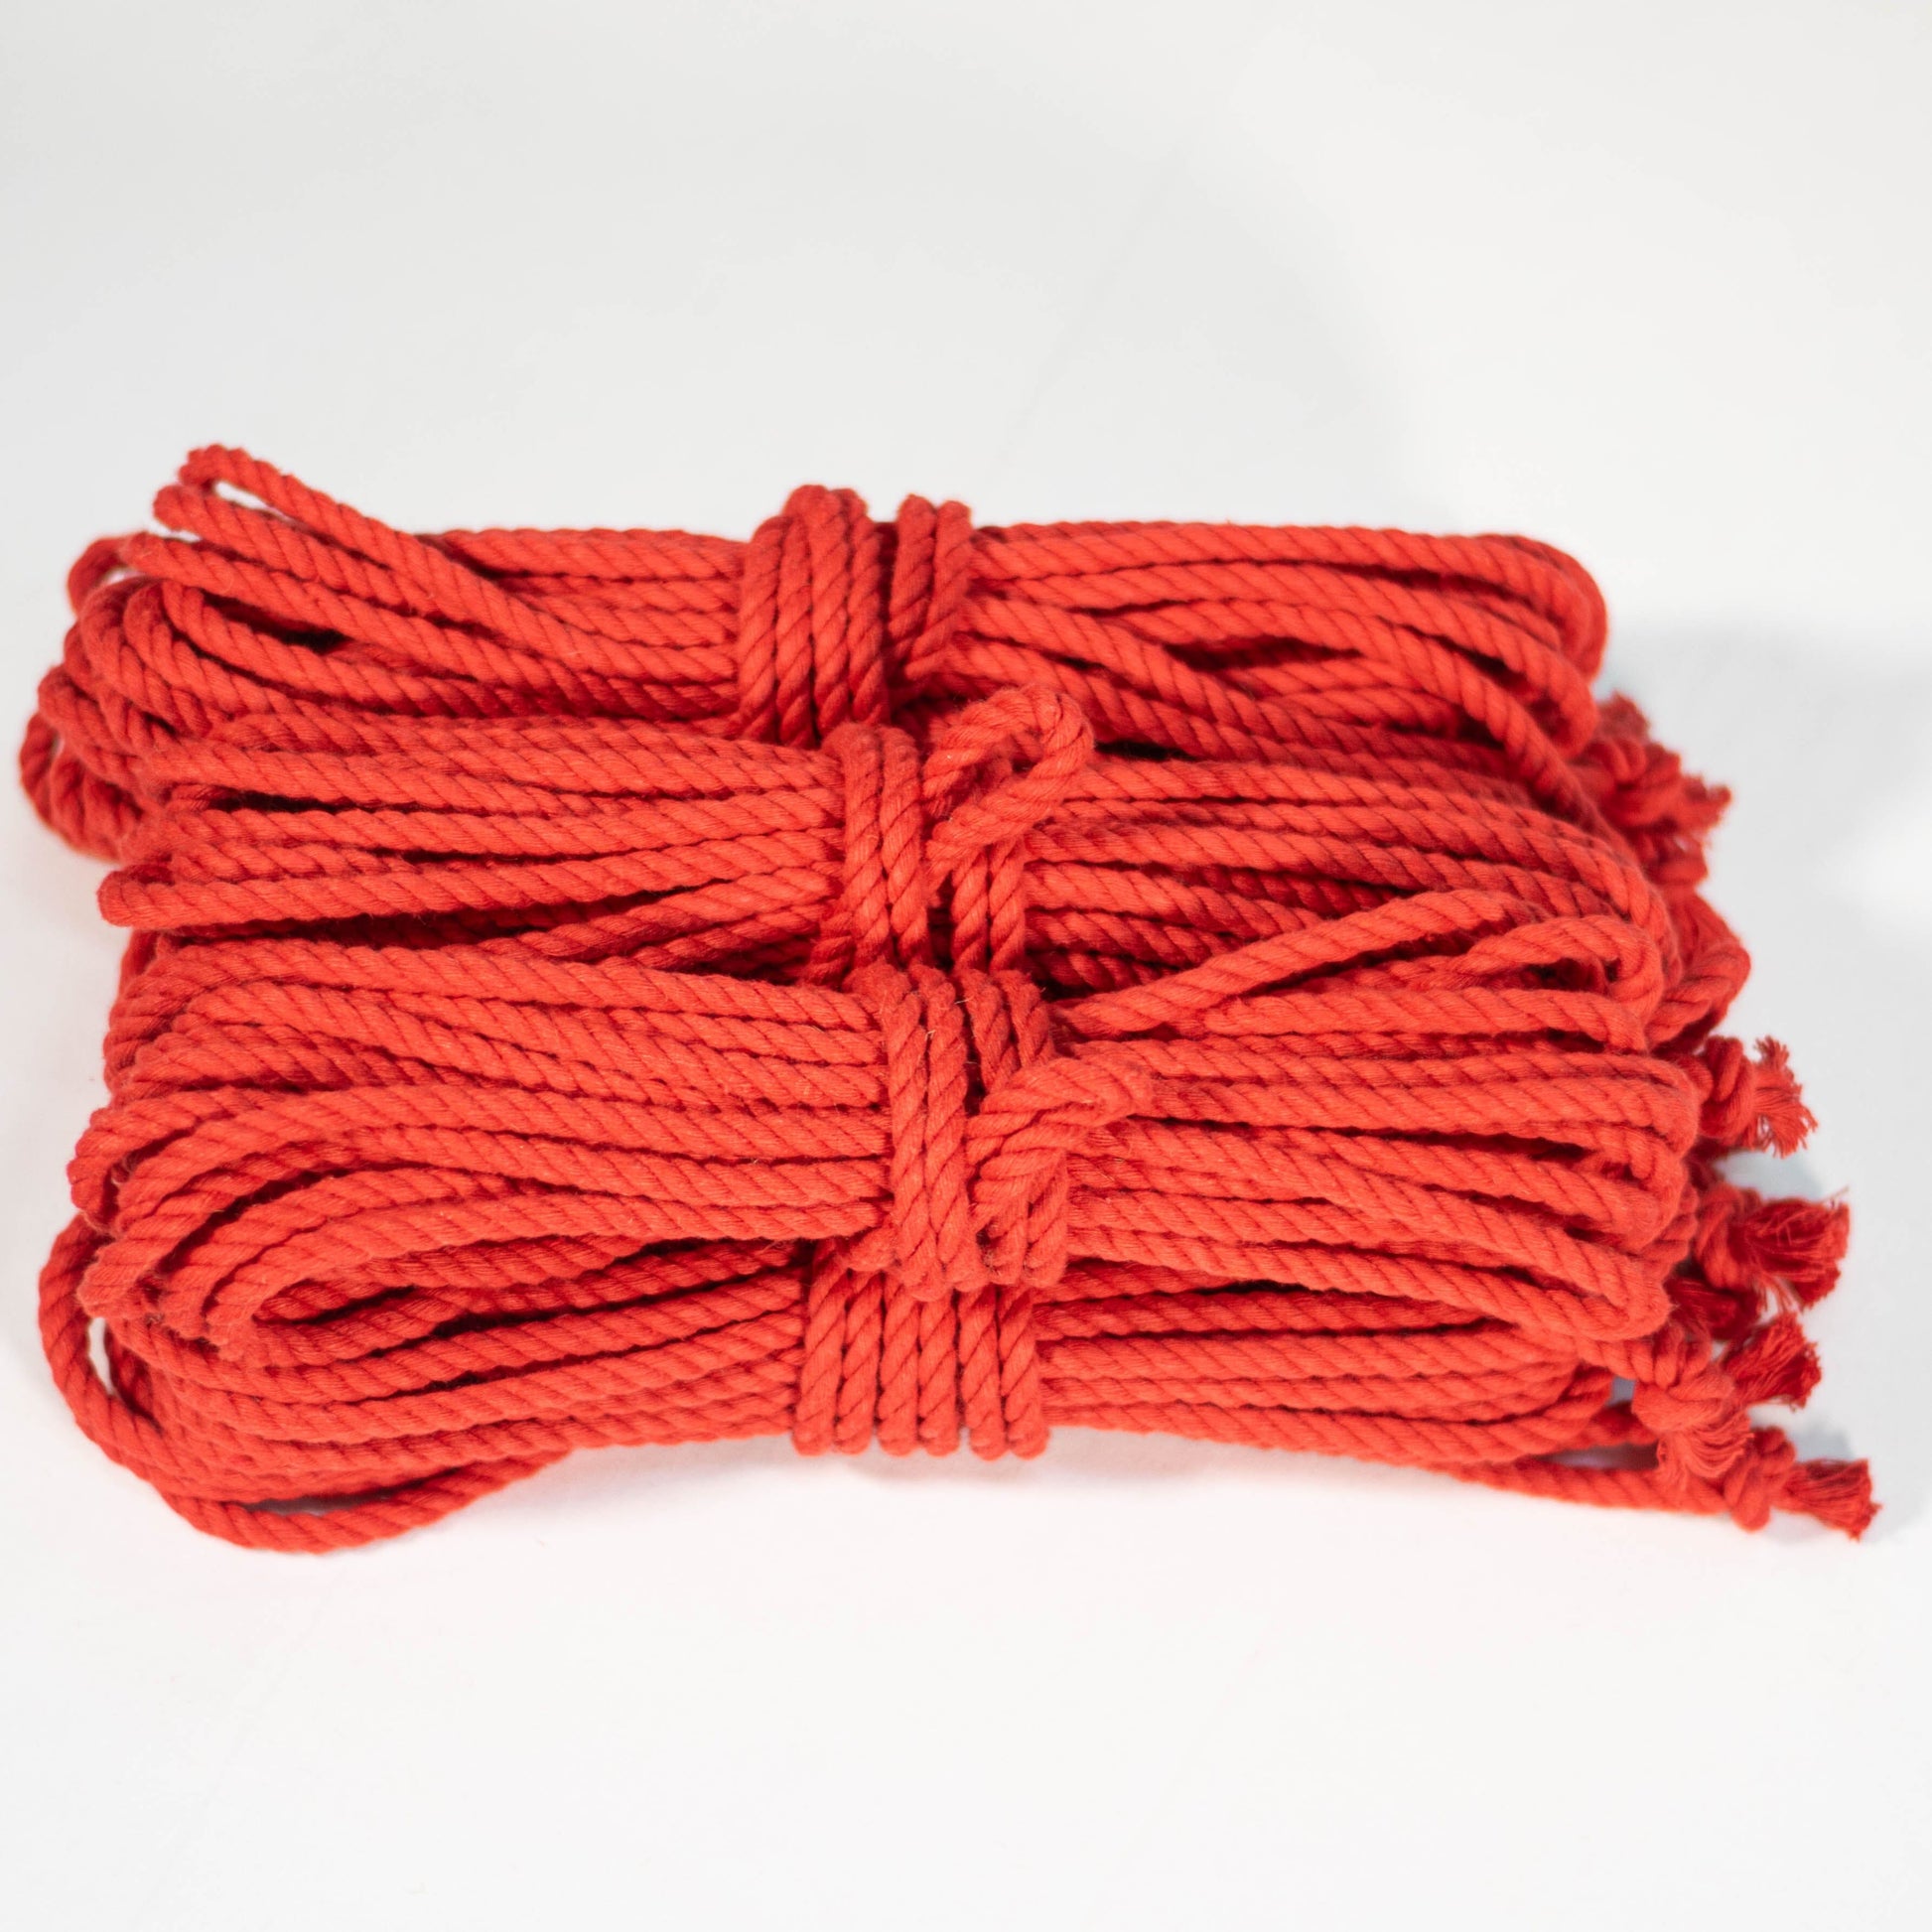 Cotton Play Ropes Shibari Rope red Bundle of 6 